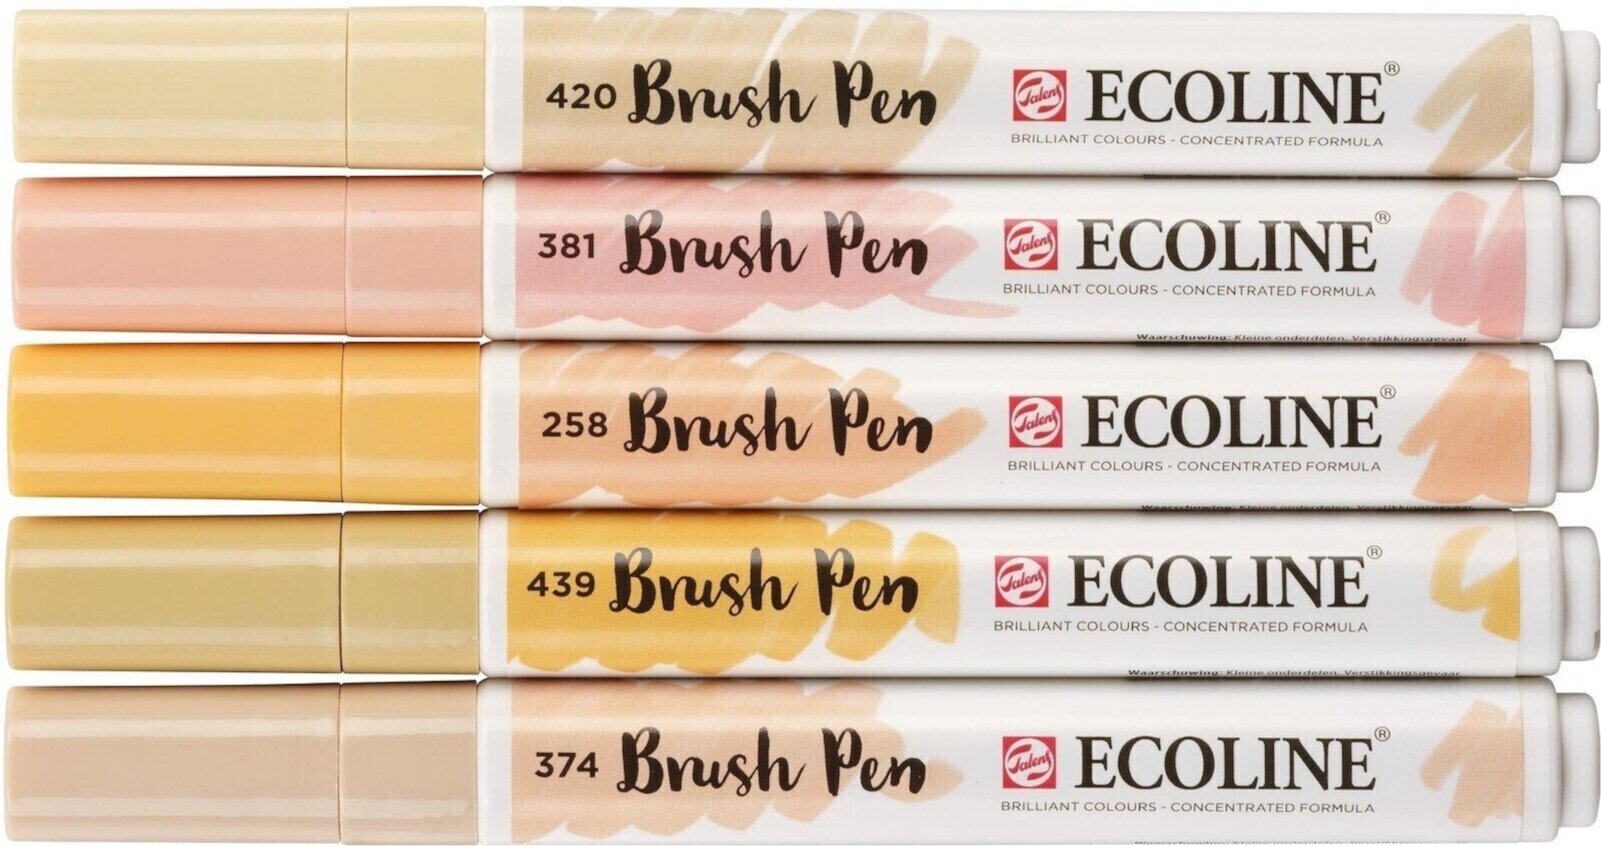 Marcador Ecoline Brush pen X6 Brushpen Brush Pen Beige Pink 5 pcs